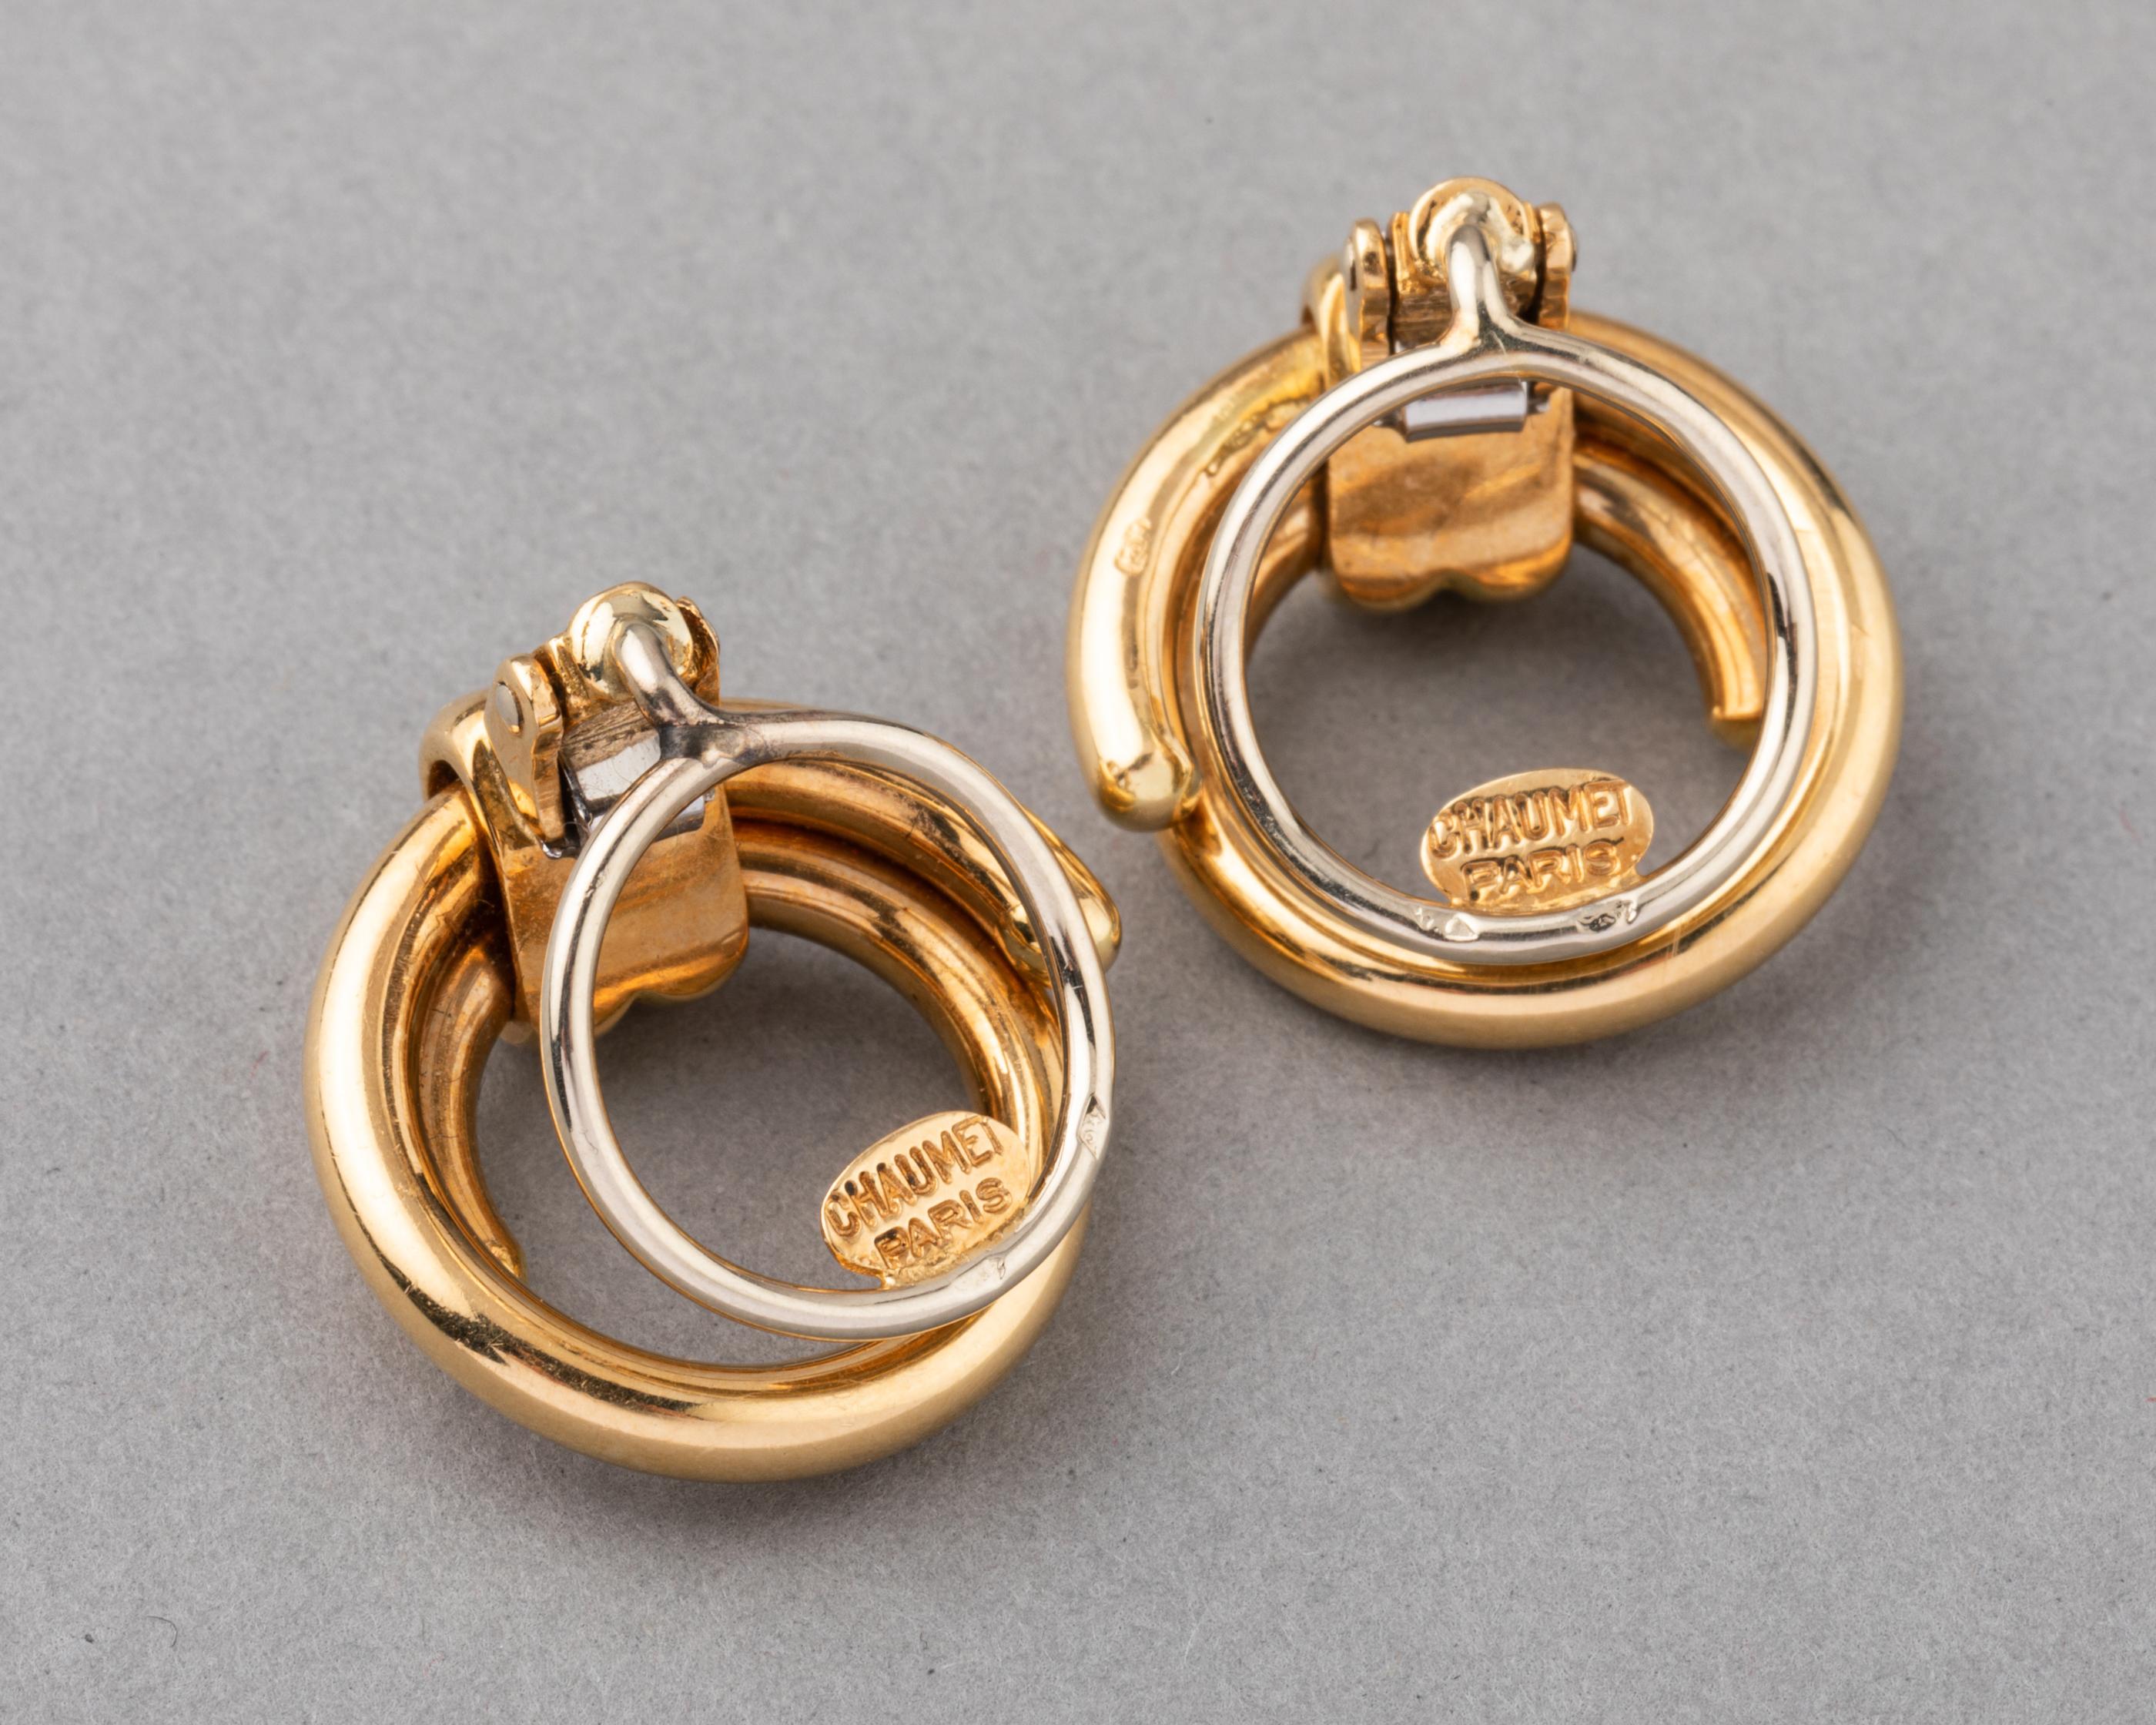 Vintage Gold Clip Earrings by Chaumet, Paris 1